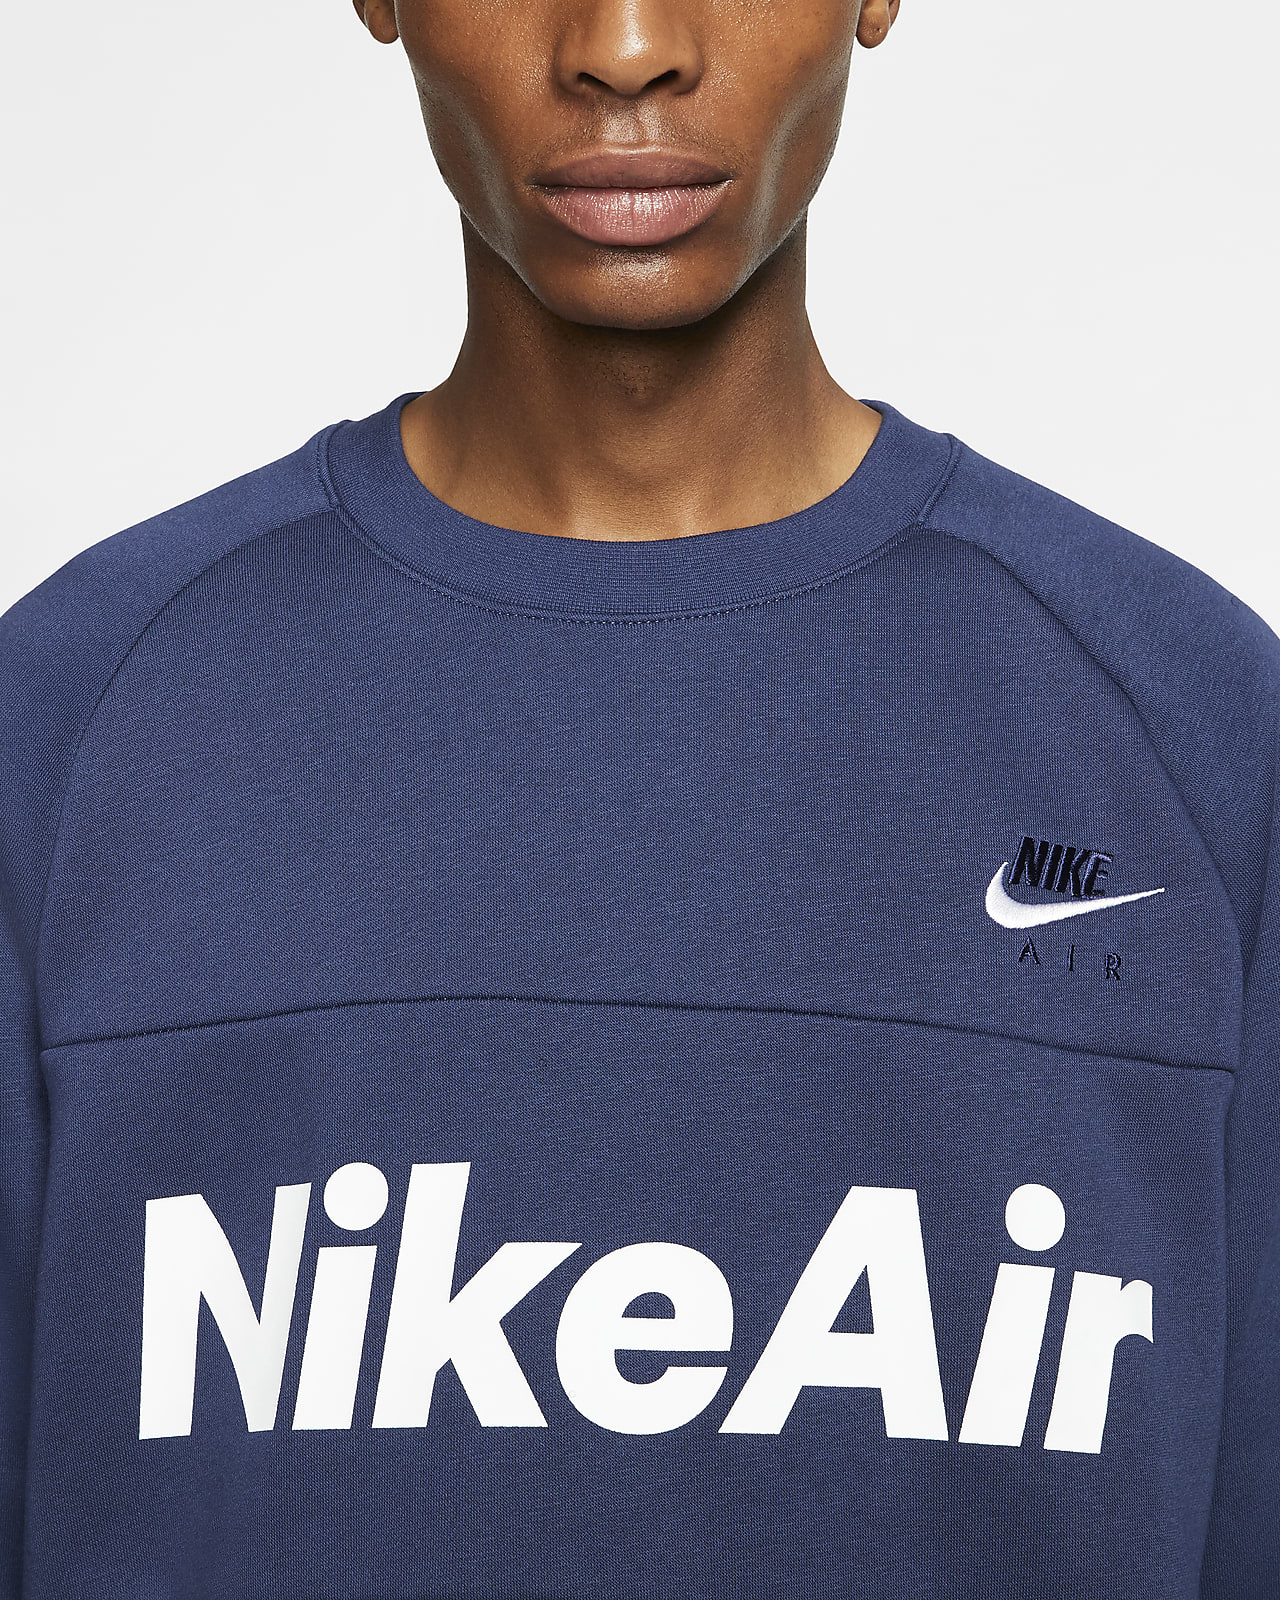 Nike Air Men's Fleece Crew. Nike LU